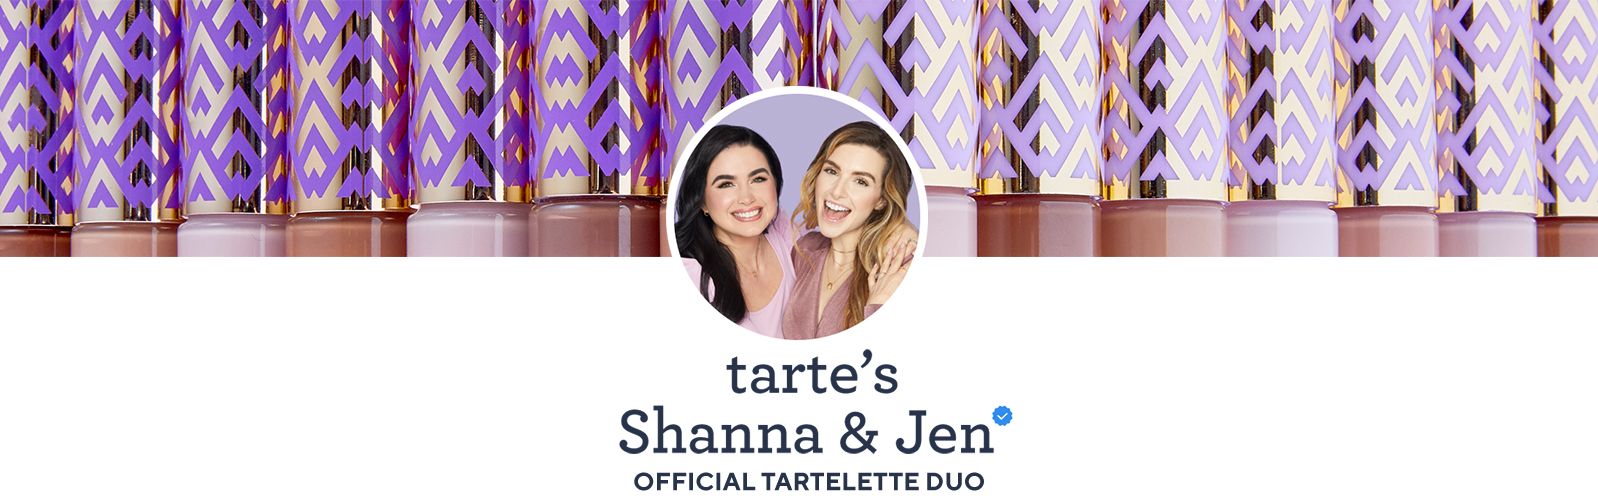 tarte’s Shanna & Jen - Official tartelette Duo